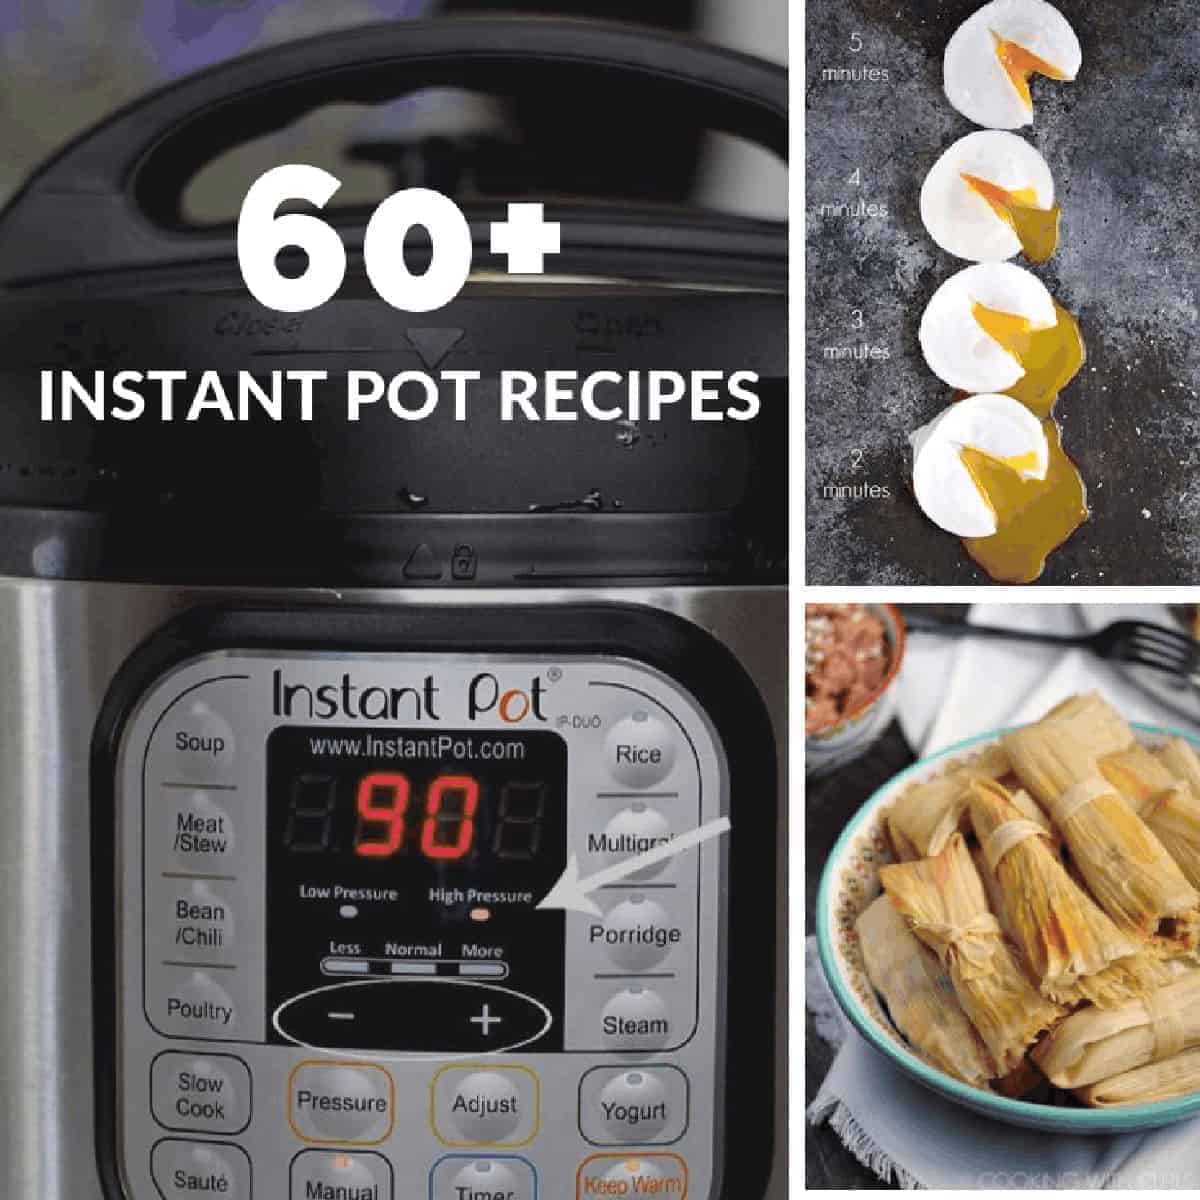 https://cookingwithcurls.com/wp-content/uploads/2021/11/60-Instant-Pot-Recipes.jpeg